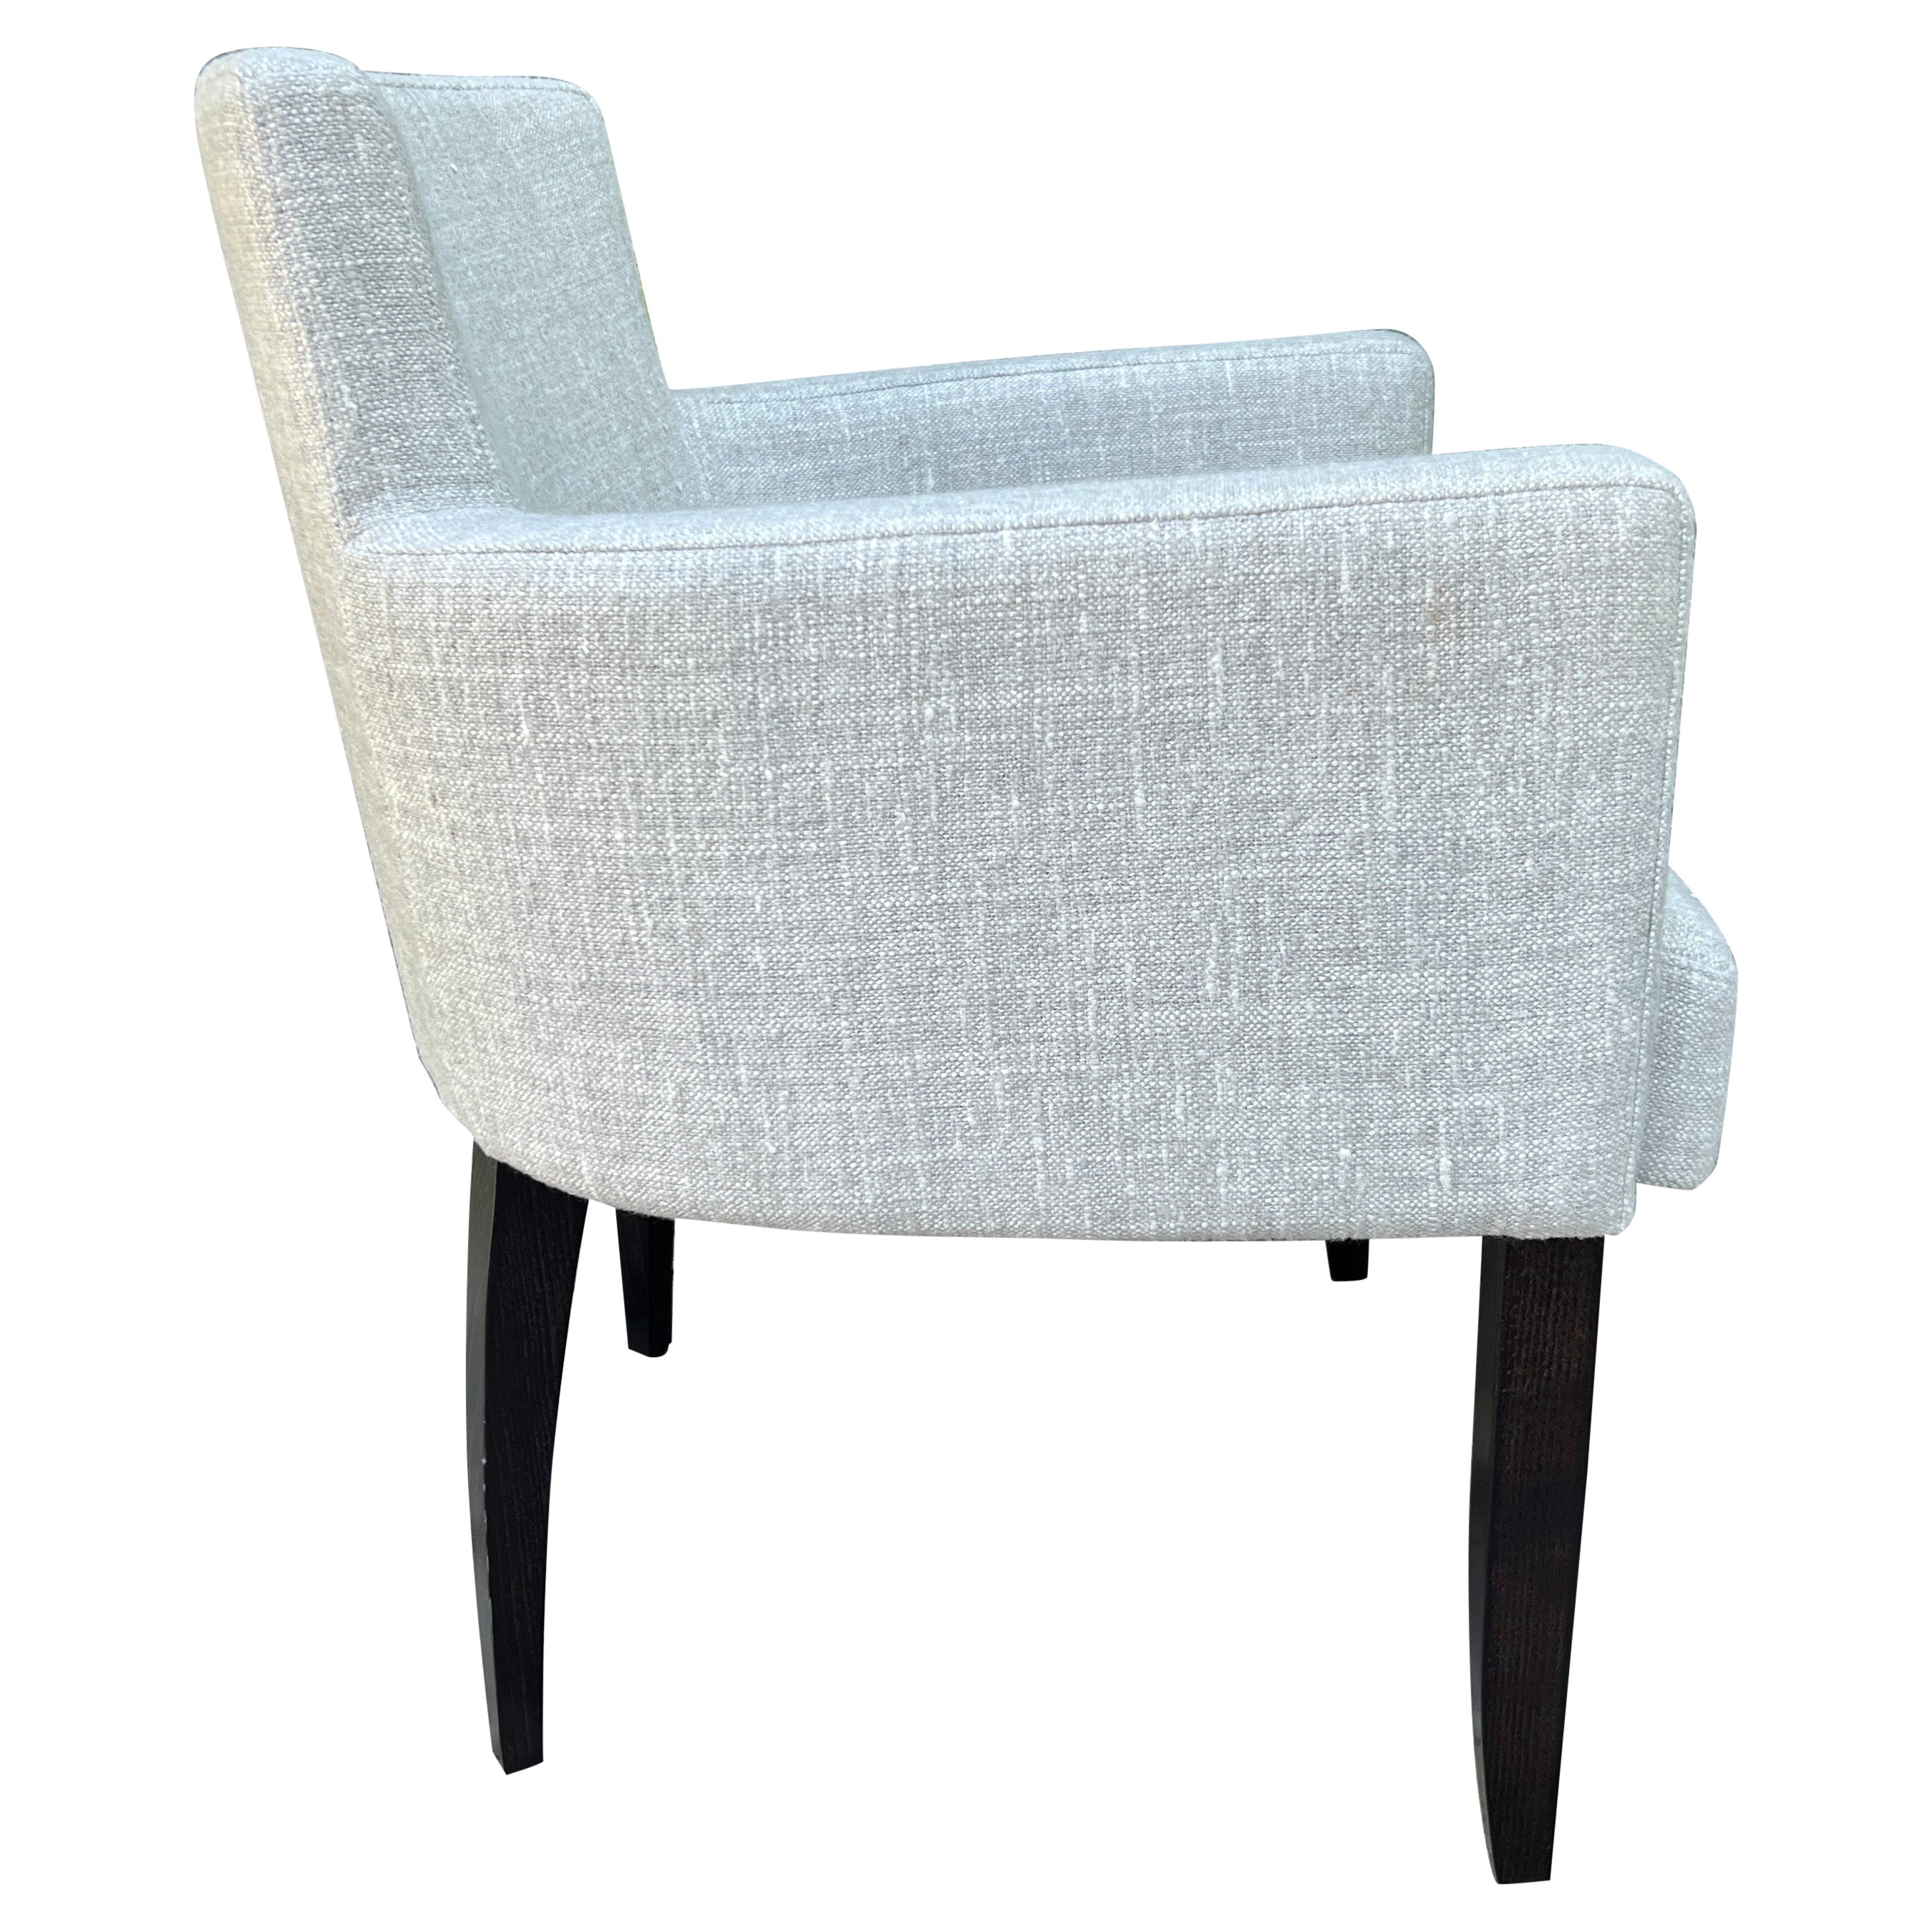 Mid-Century Modern Chair in Woven Grey by Pierre Frey